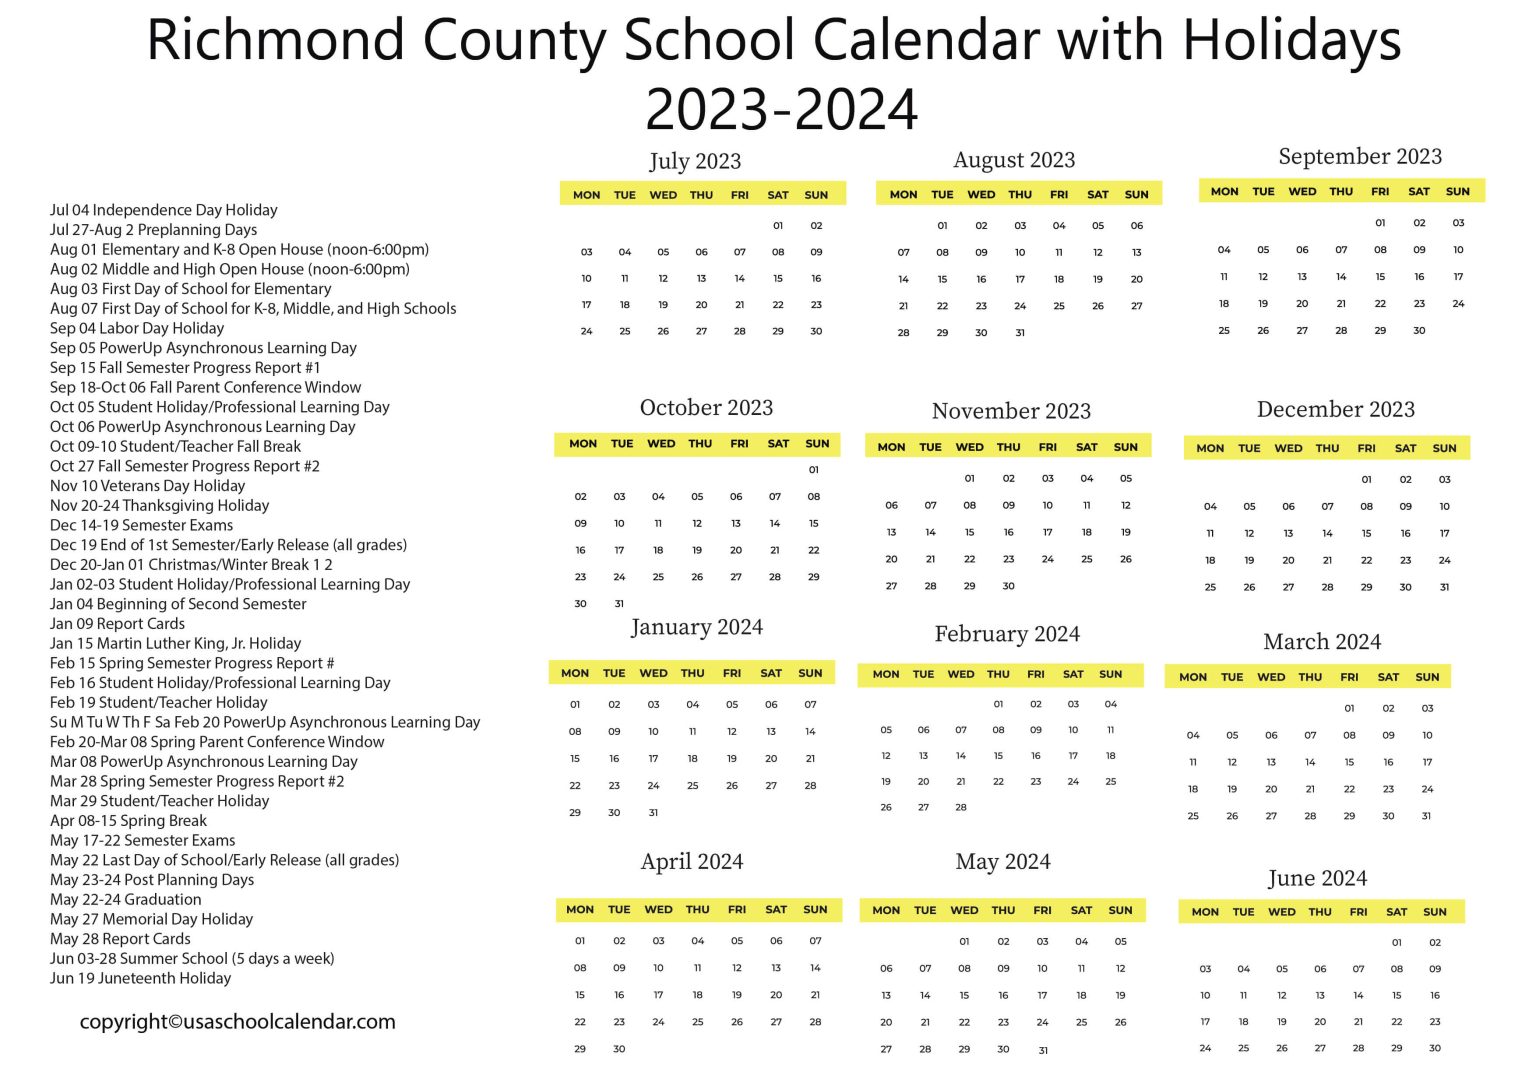 richmond-county-school-calendar-with-holidays-2023-2024